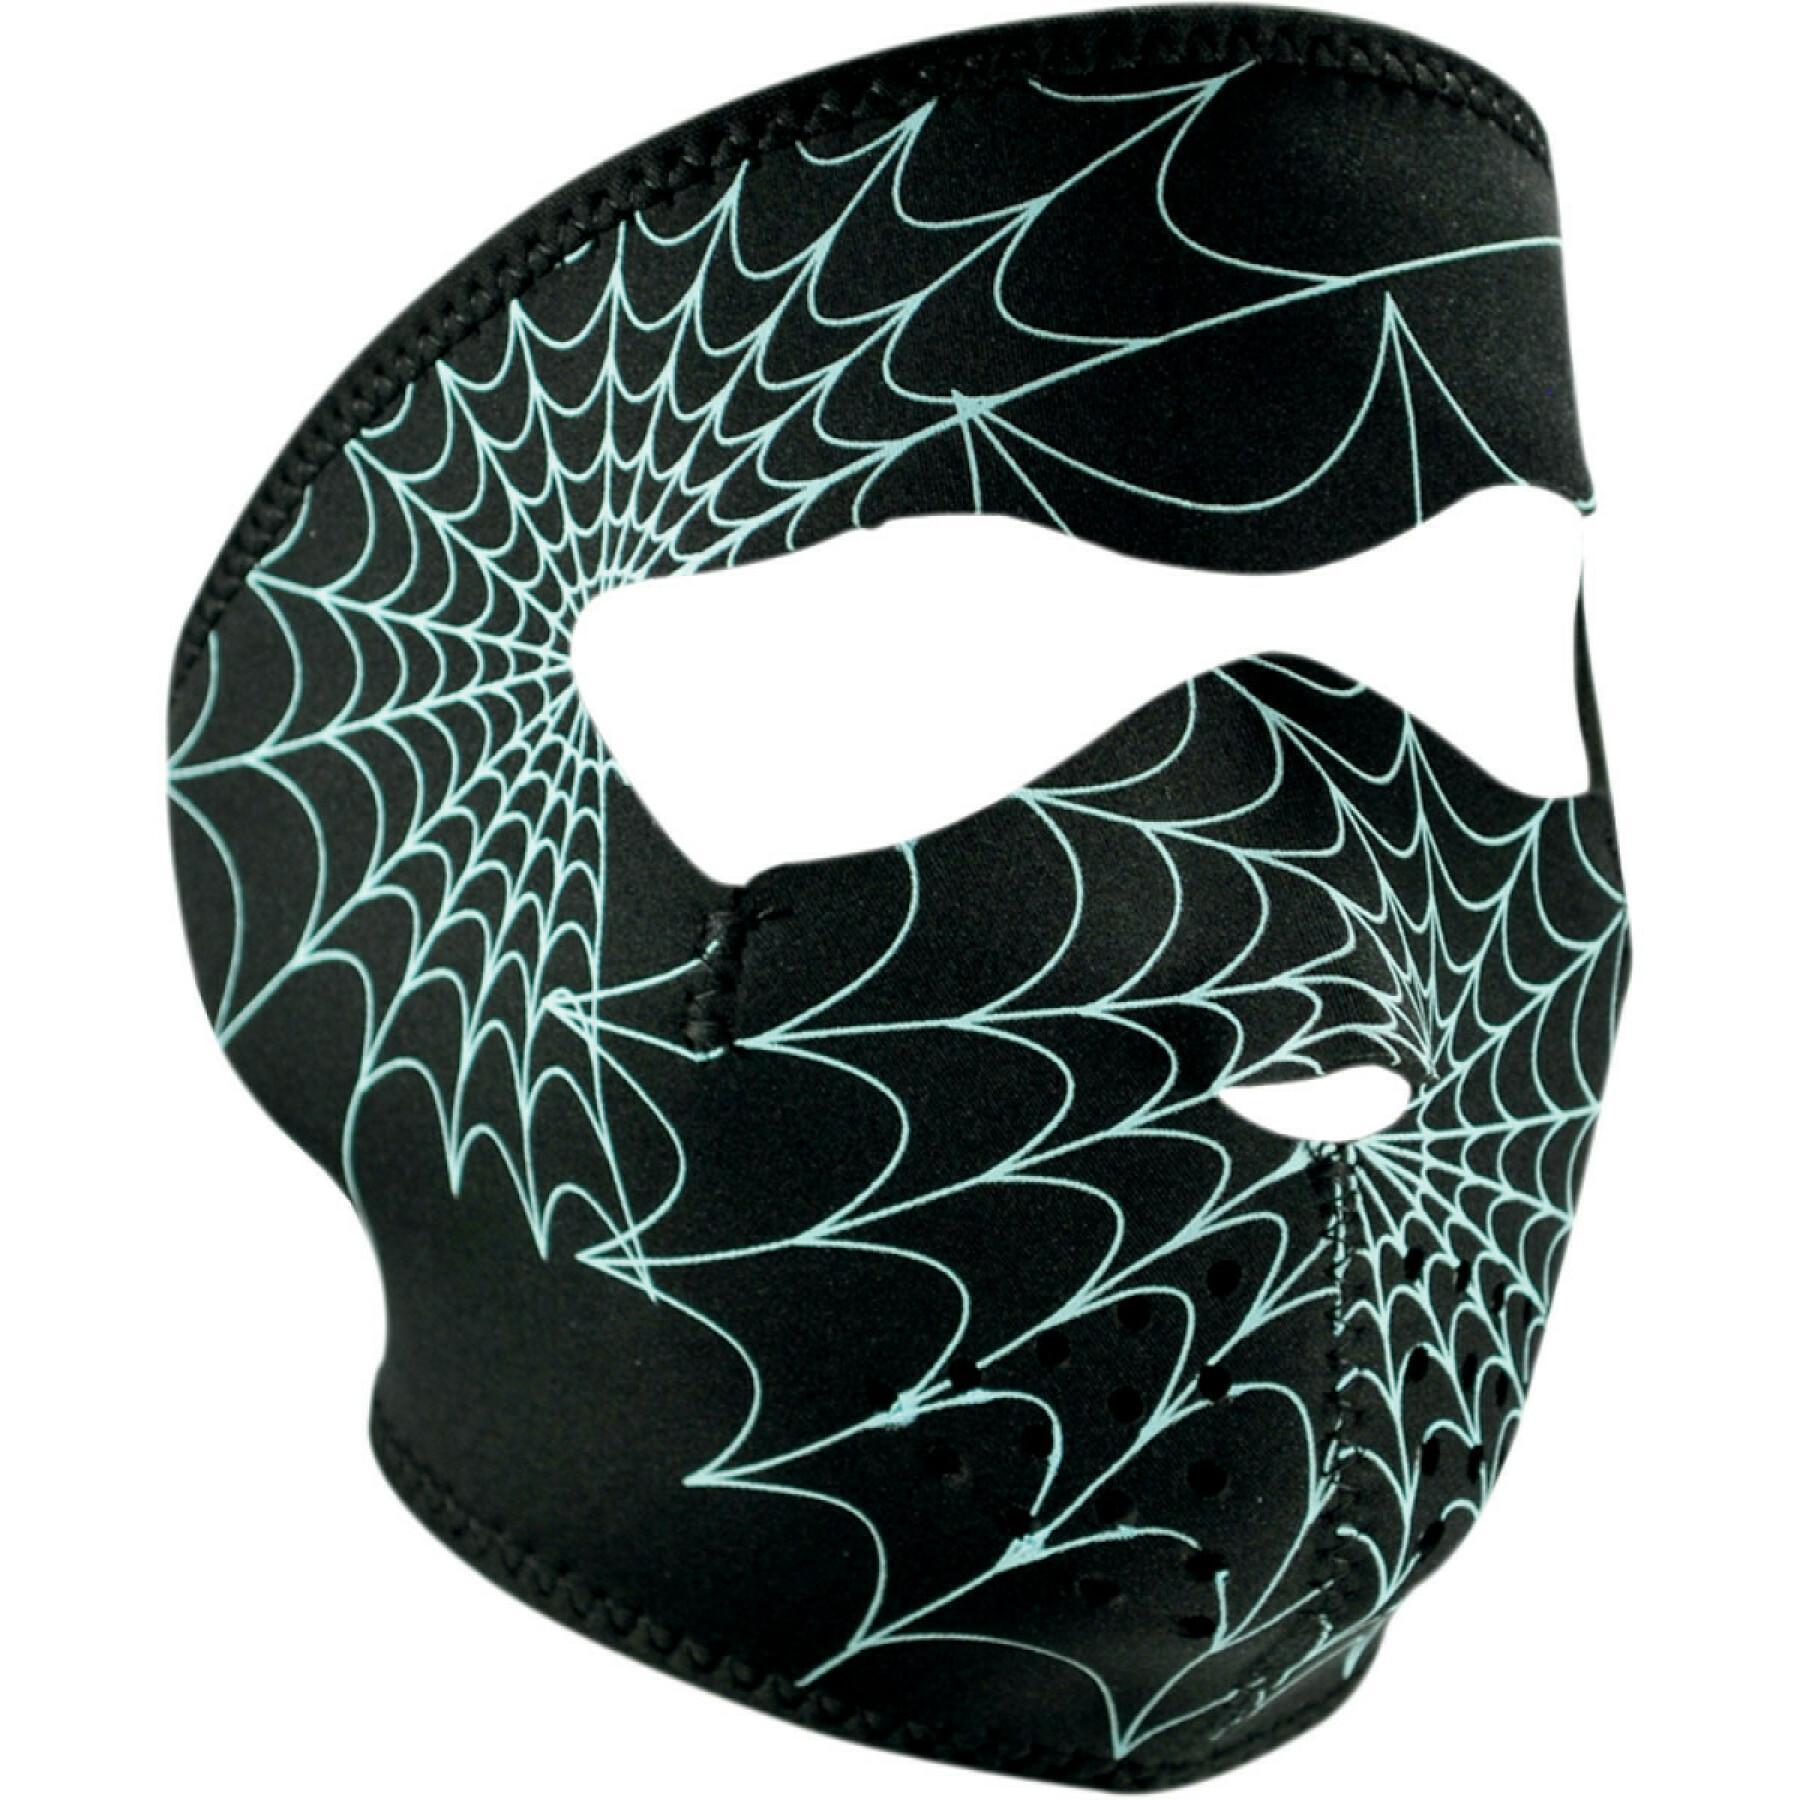 Pasamontañas para motos Zan Headgear full face glow-in-the-dark spider web